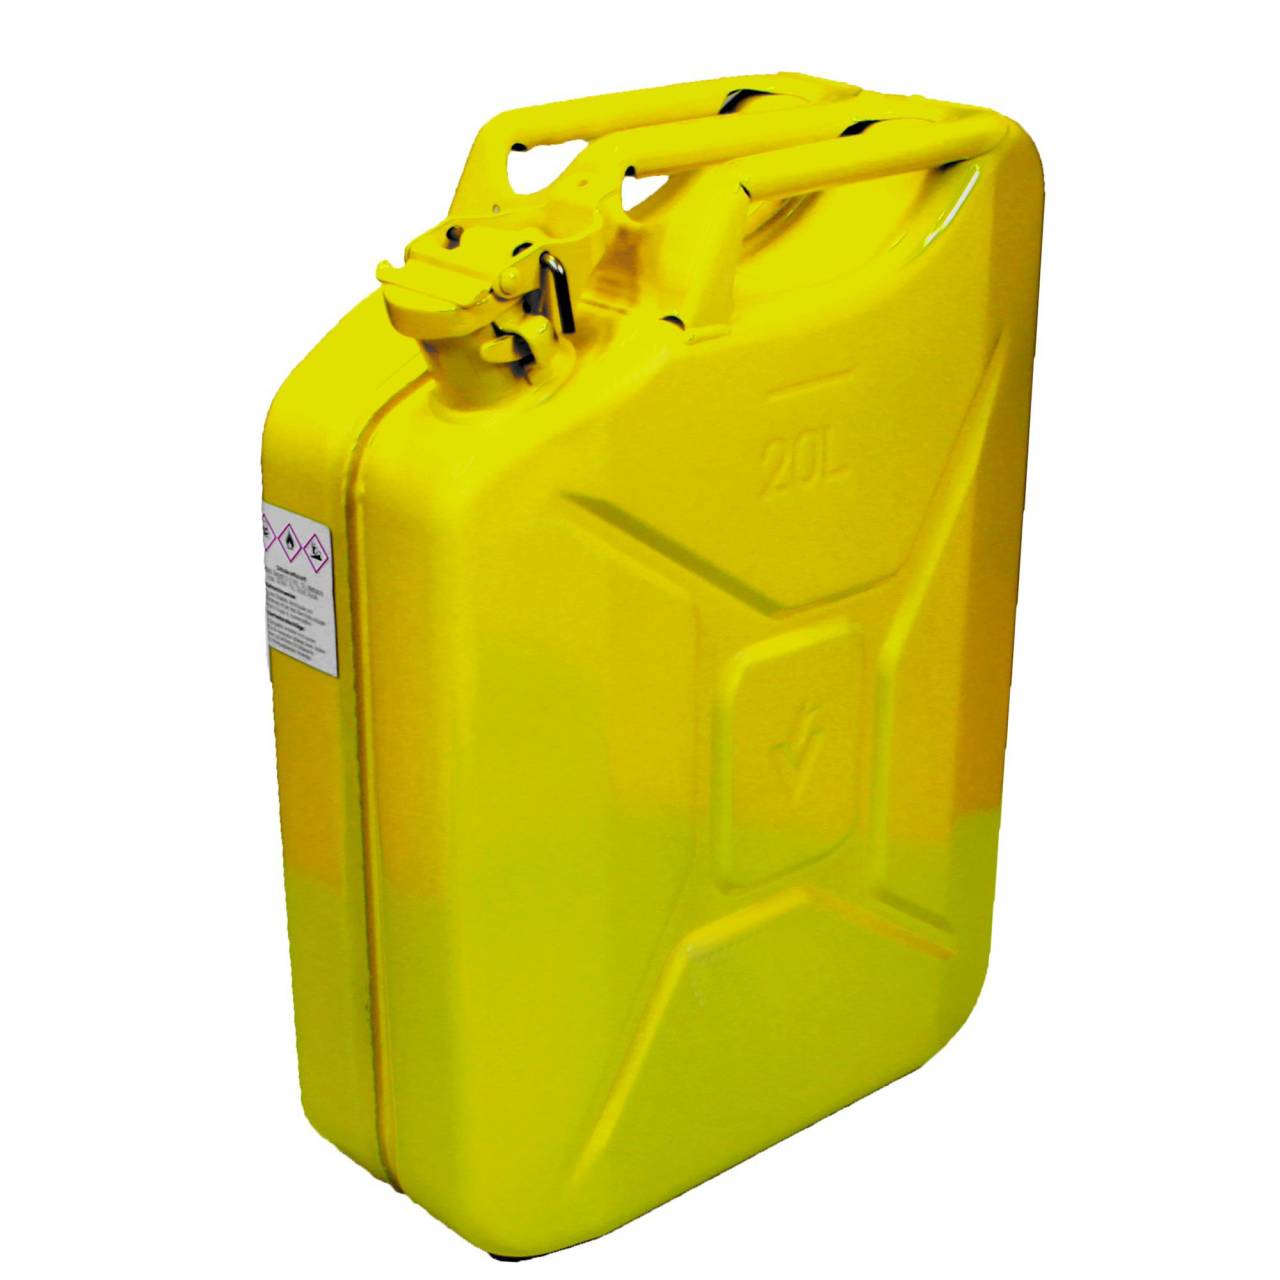 Benzinkanister 20 Liter, Gelb, TÜV-Bauartprüfung/UN-Zulassung